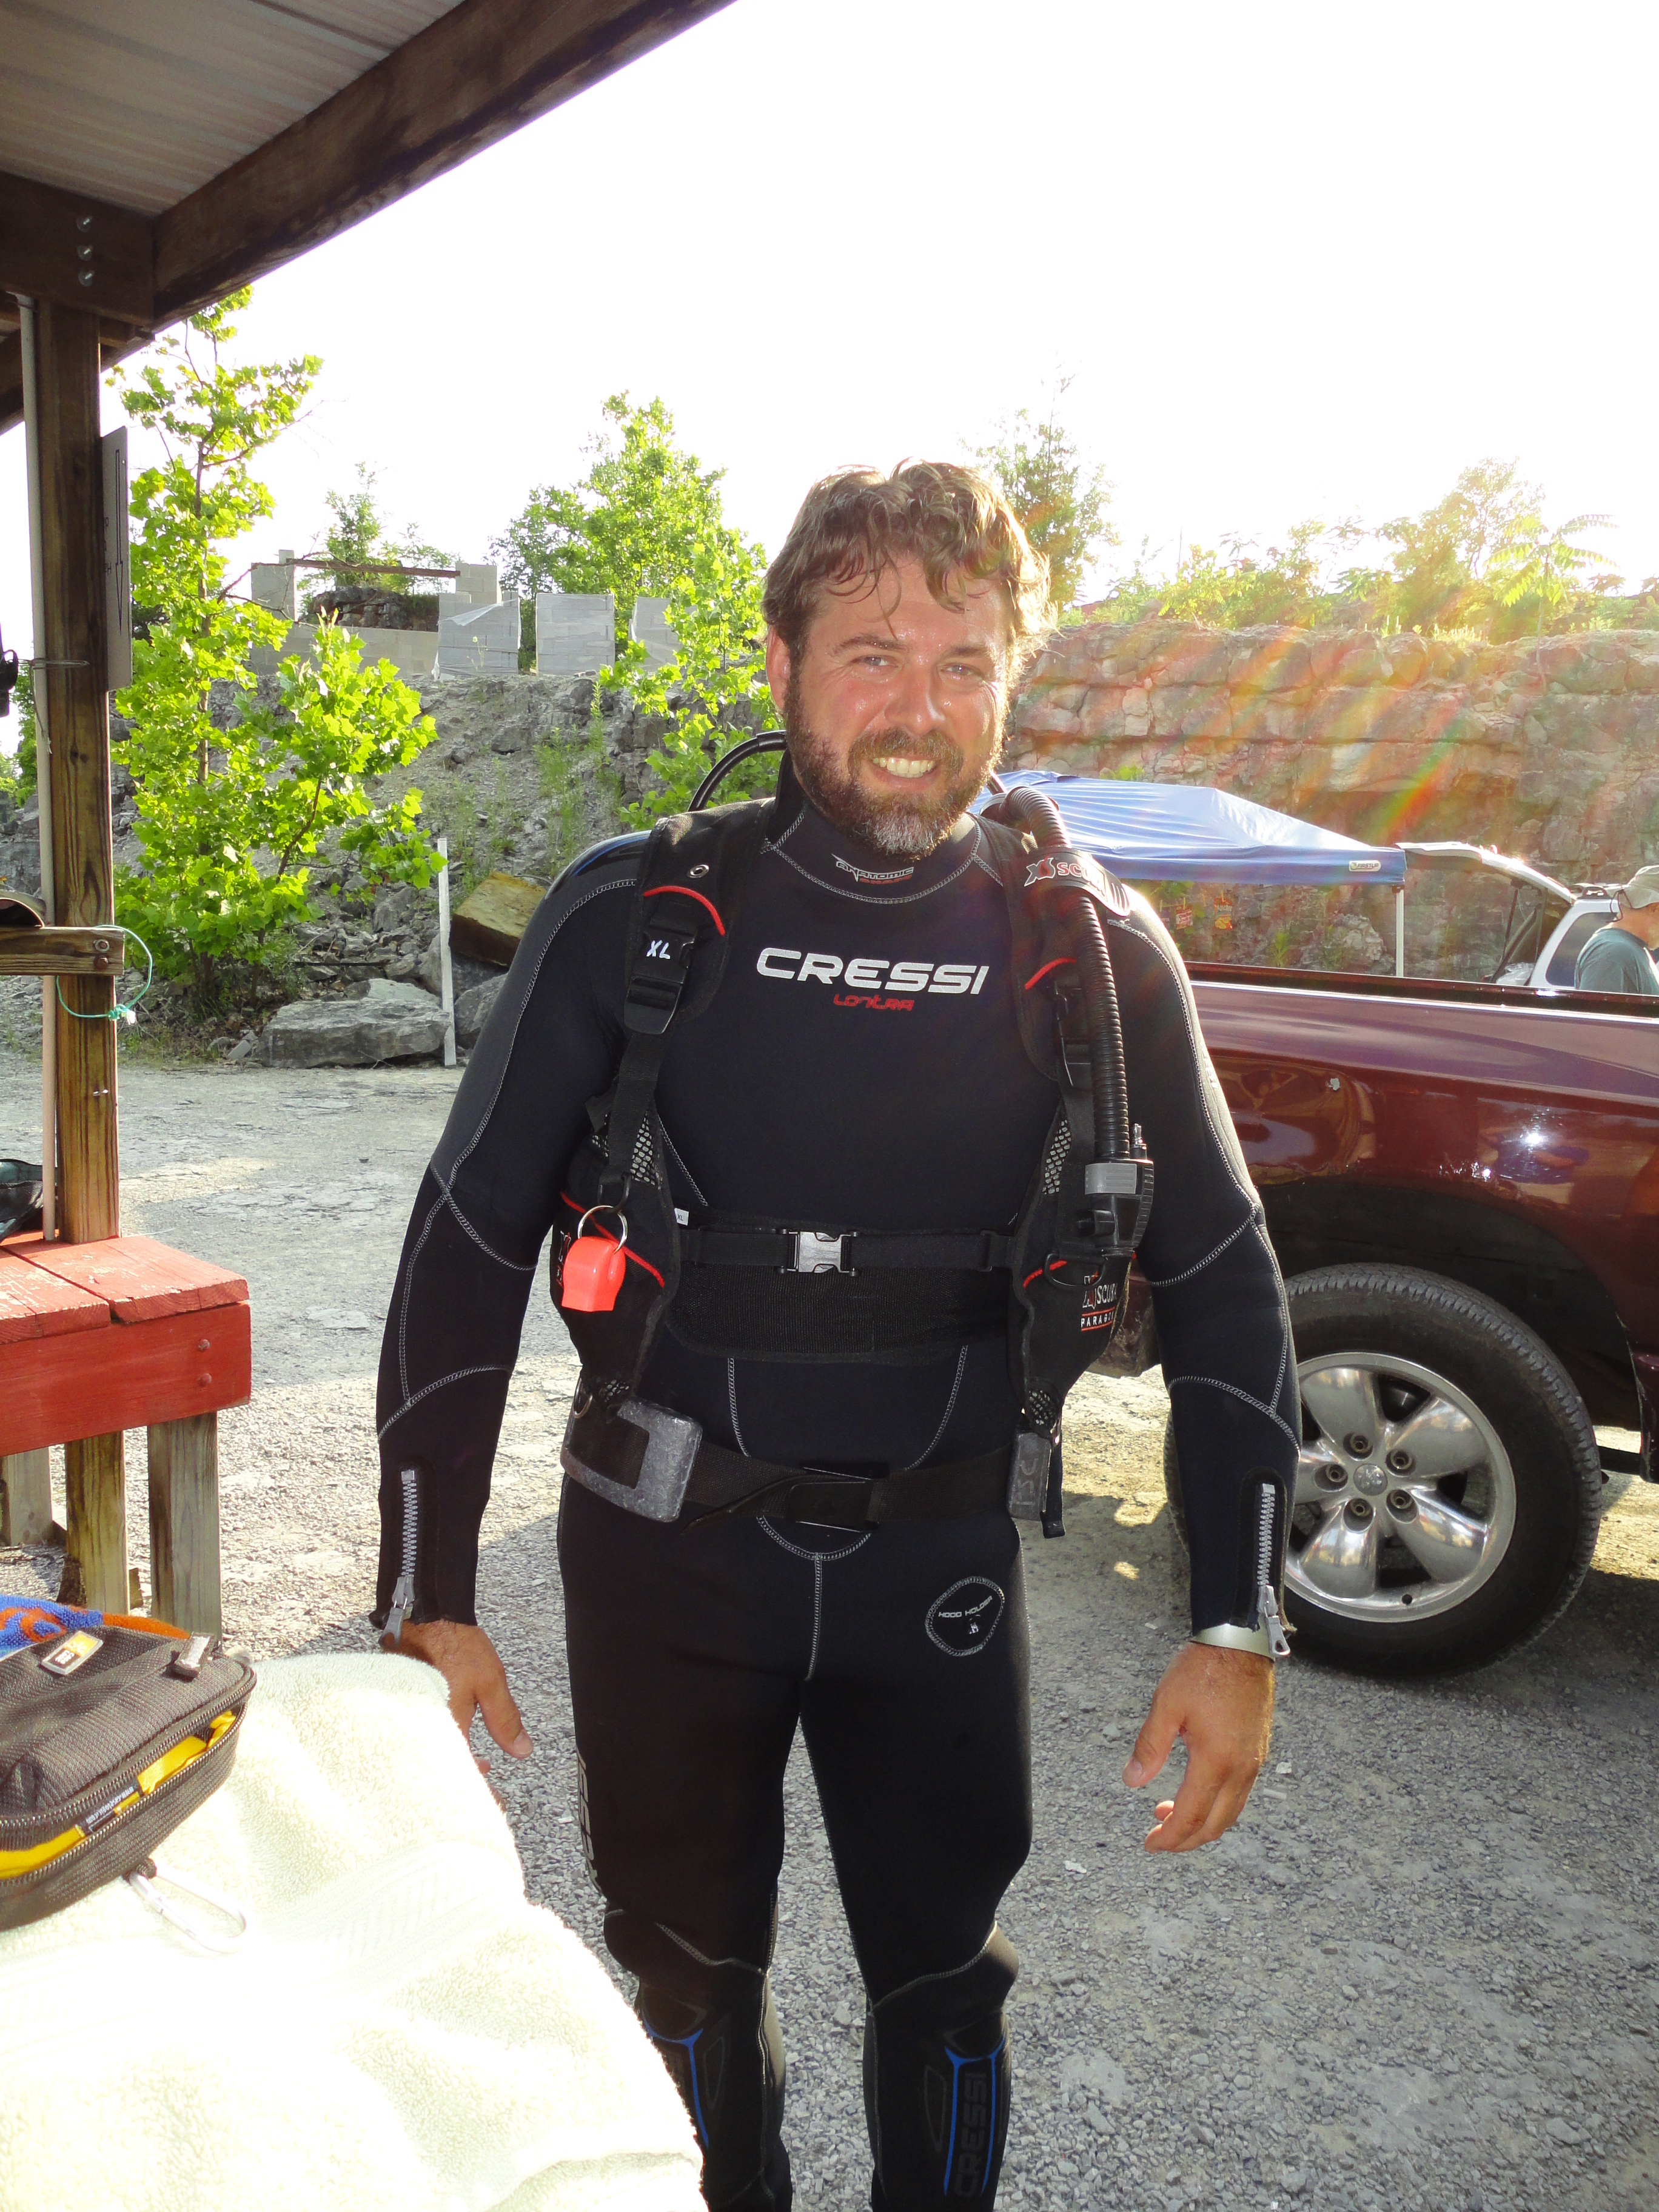 certified SSI open water scuba diver.